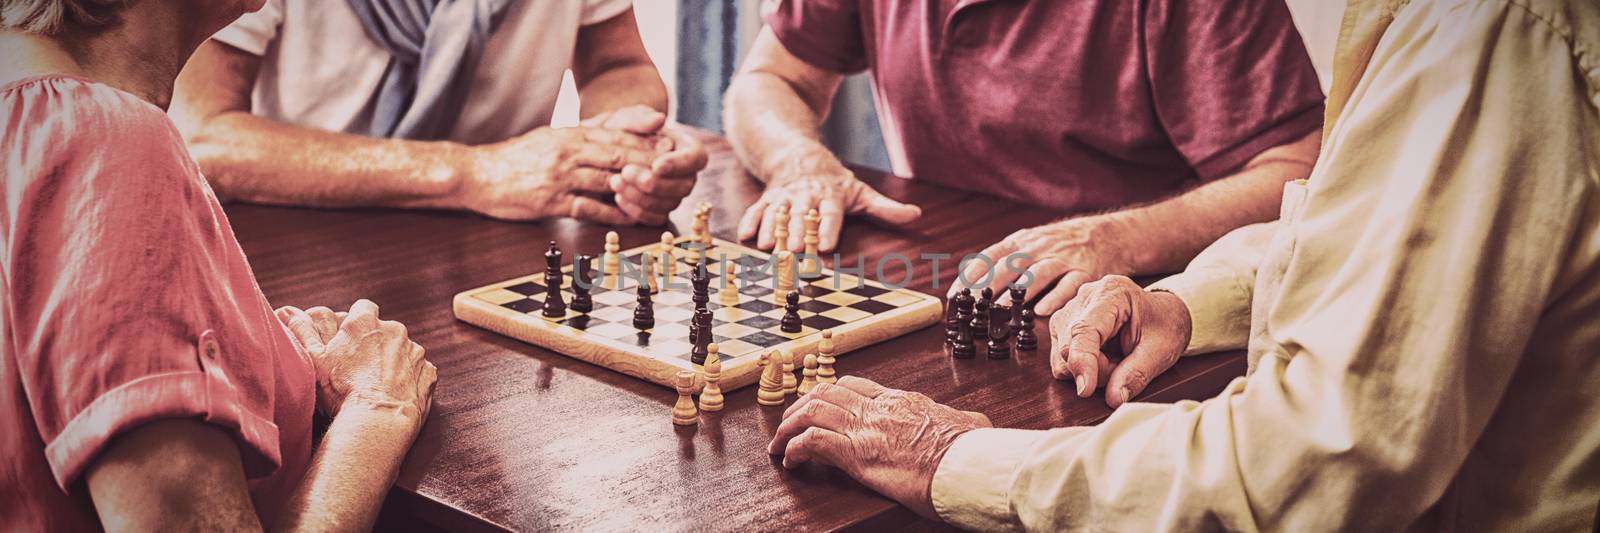 Seniors playing chess by Wavebreakmedia